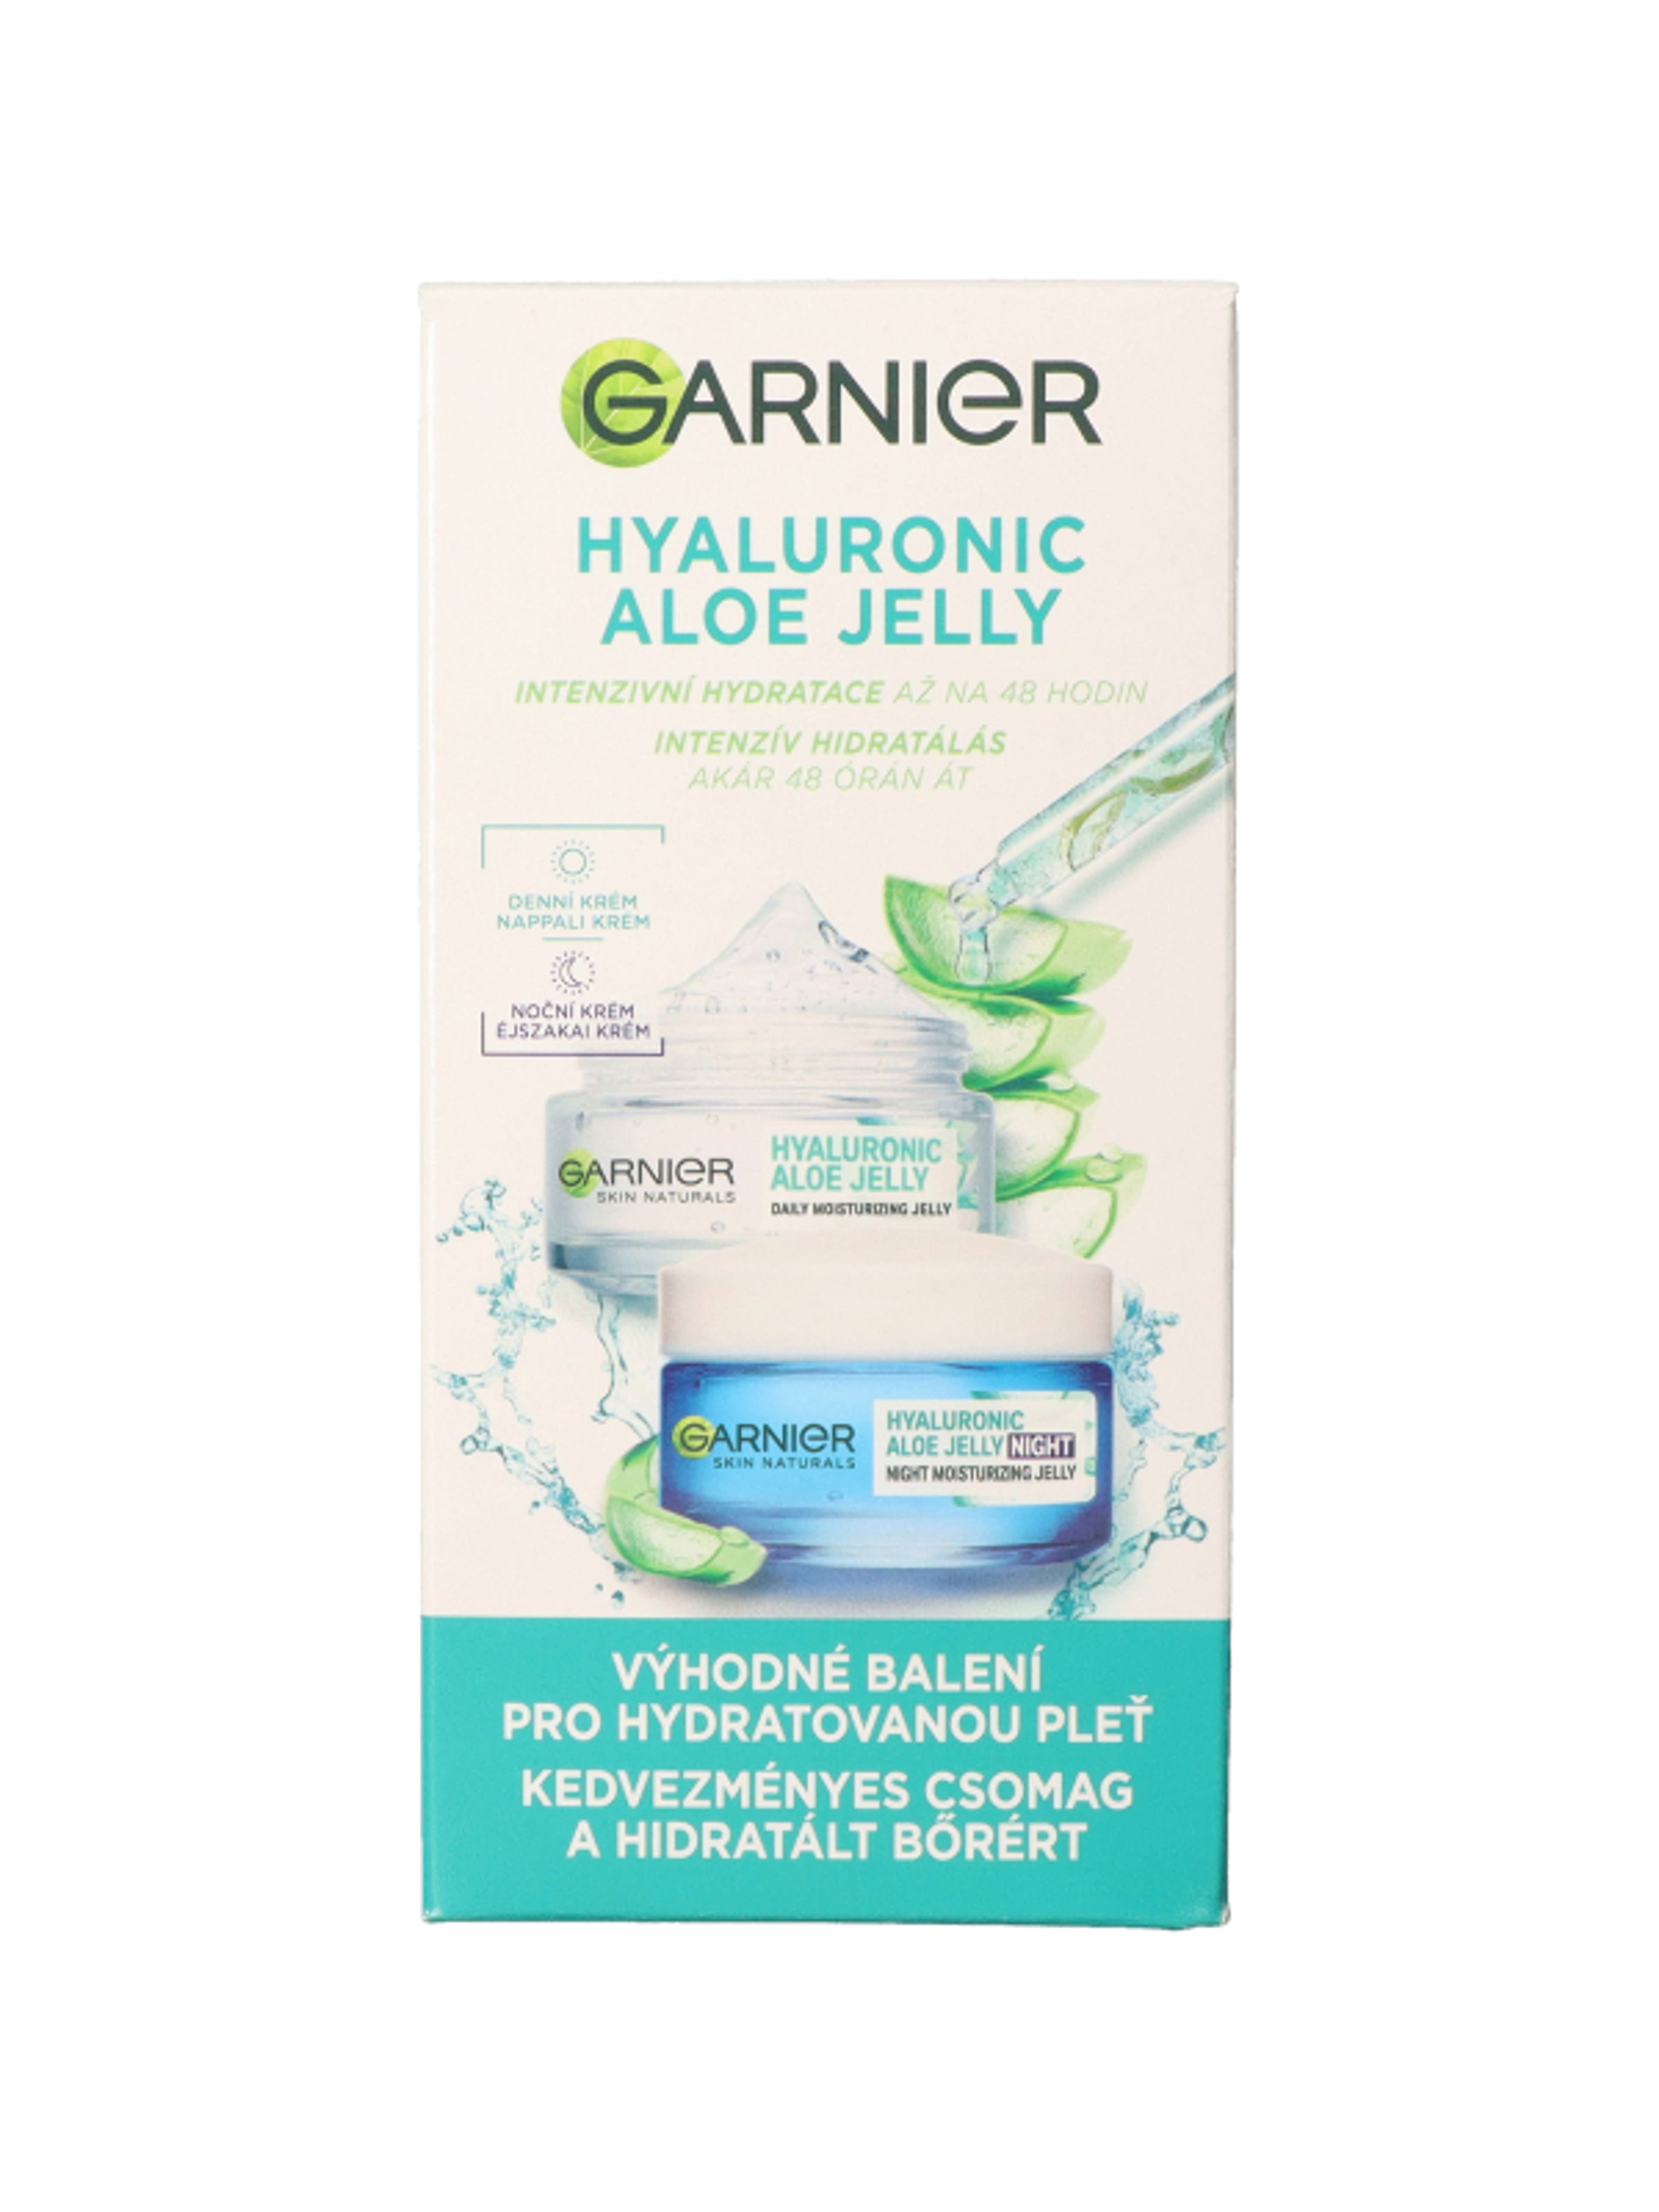 Garnier Hyaluronic Aloe Jelly arckrém duopack - 100 ml